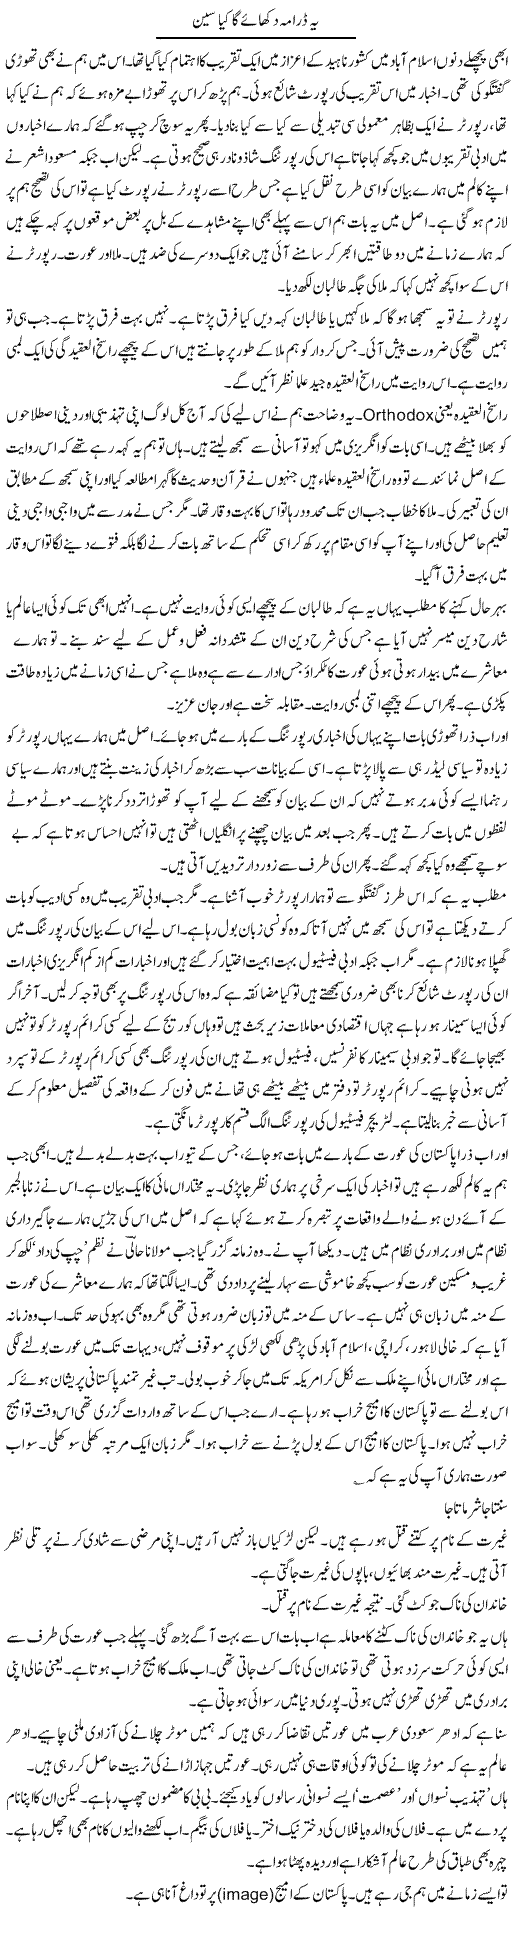 Ye Drama Dikhay Ga Kia Seen | Intizar Hussain | Daily Urdu Columns